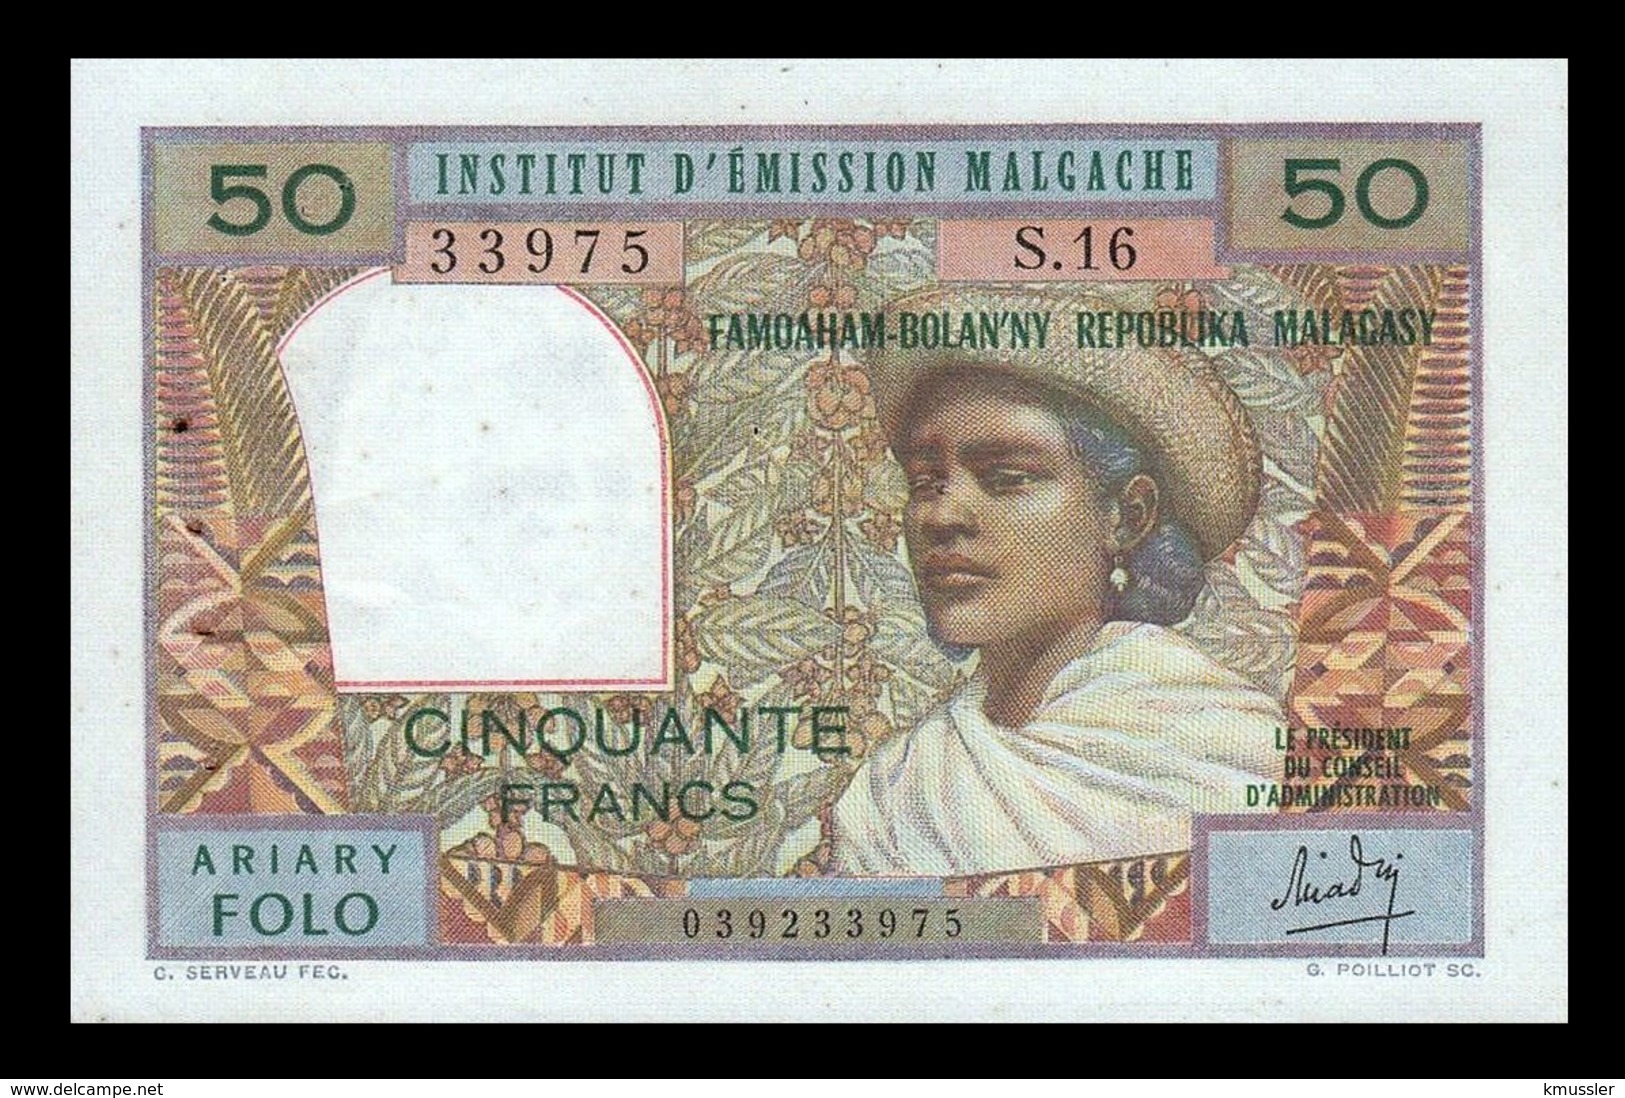 # # # Banknote Madagaskar (Madagascar) 50 Ariary Folo UNC- # # # - Madagaskar